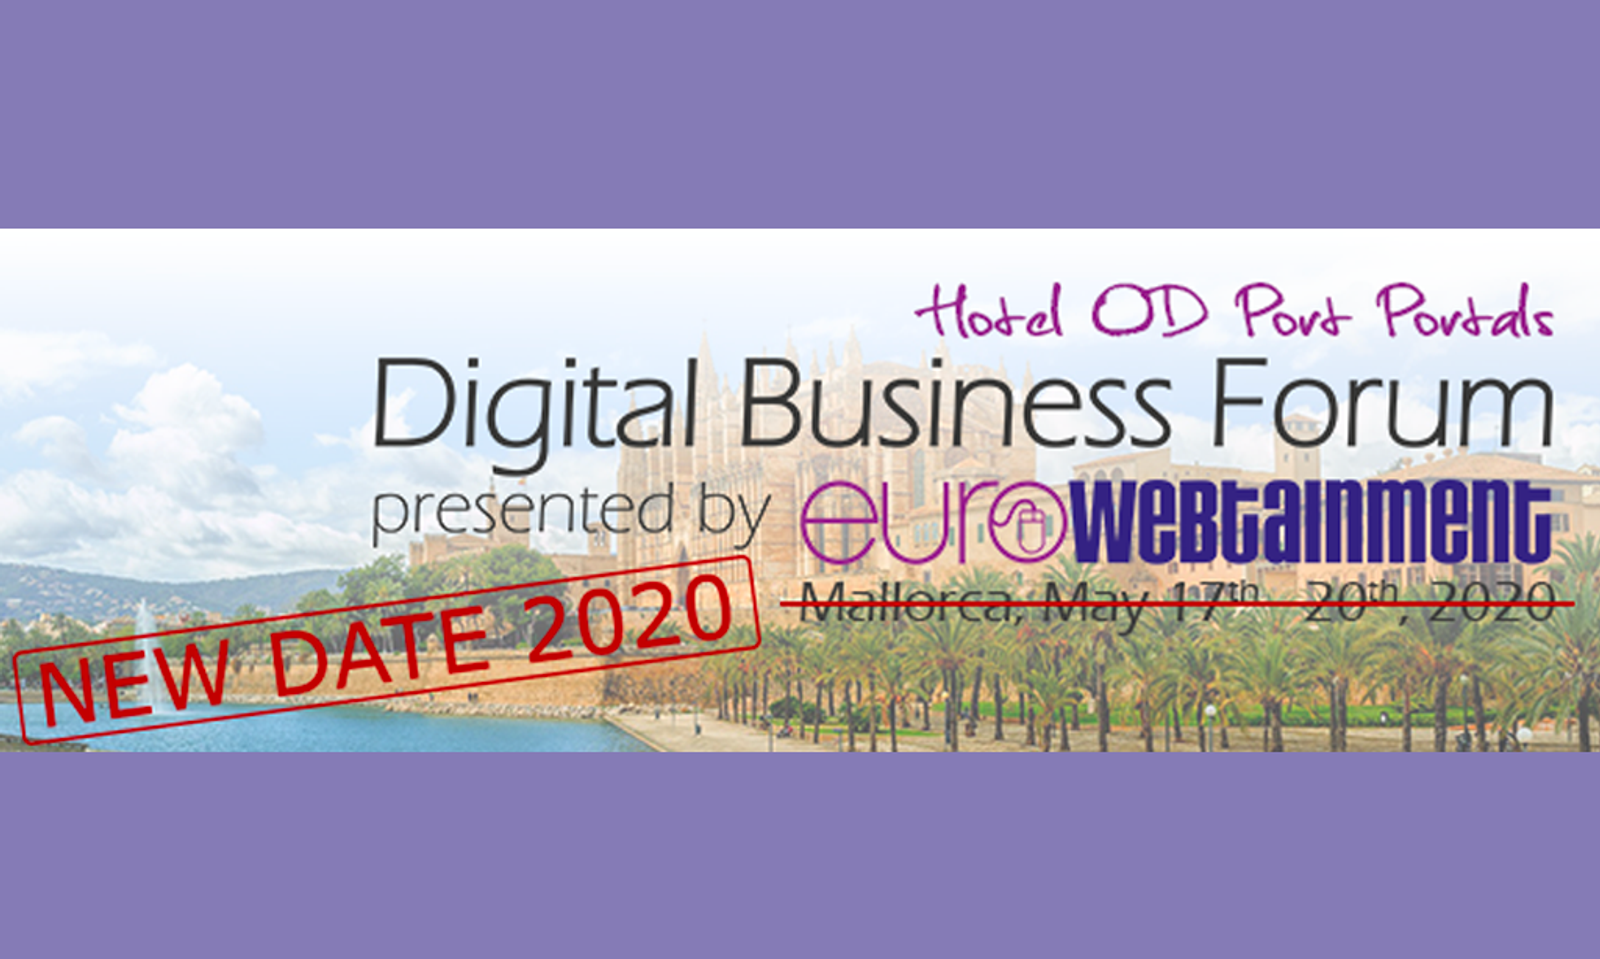 Eurowebtainment's Digital Business Forum Postpones Mallorca Show